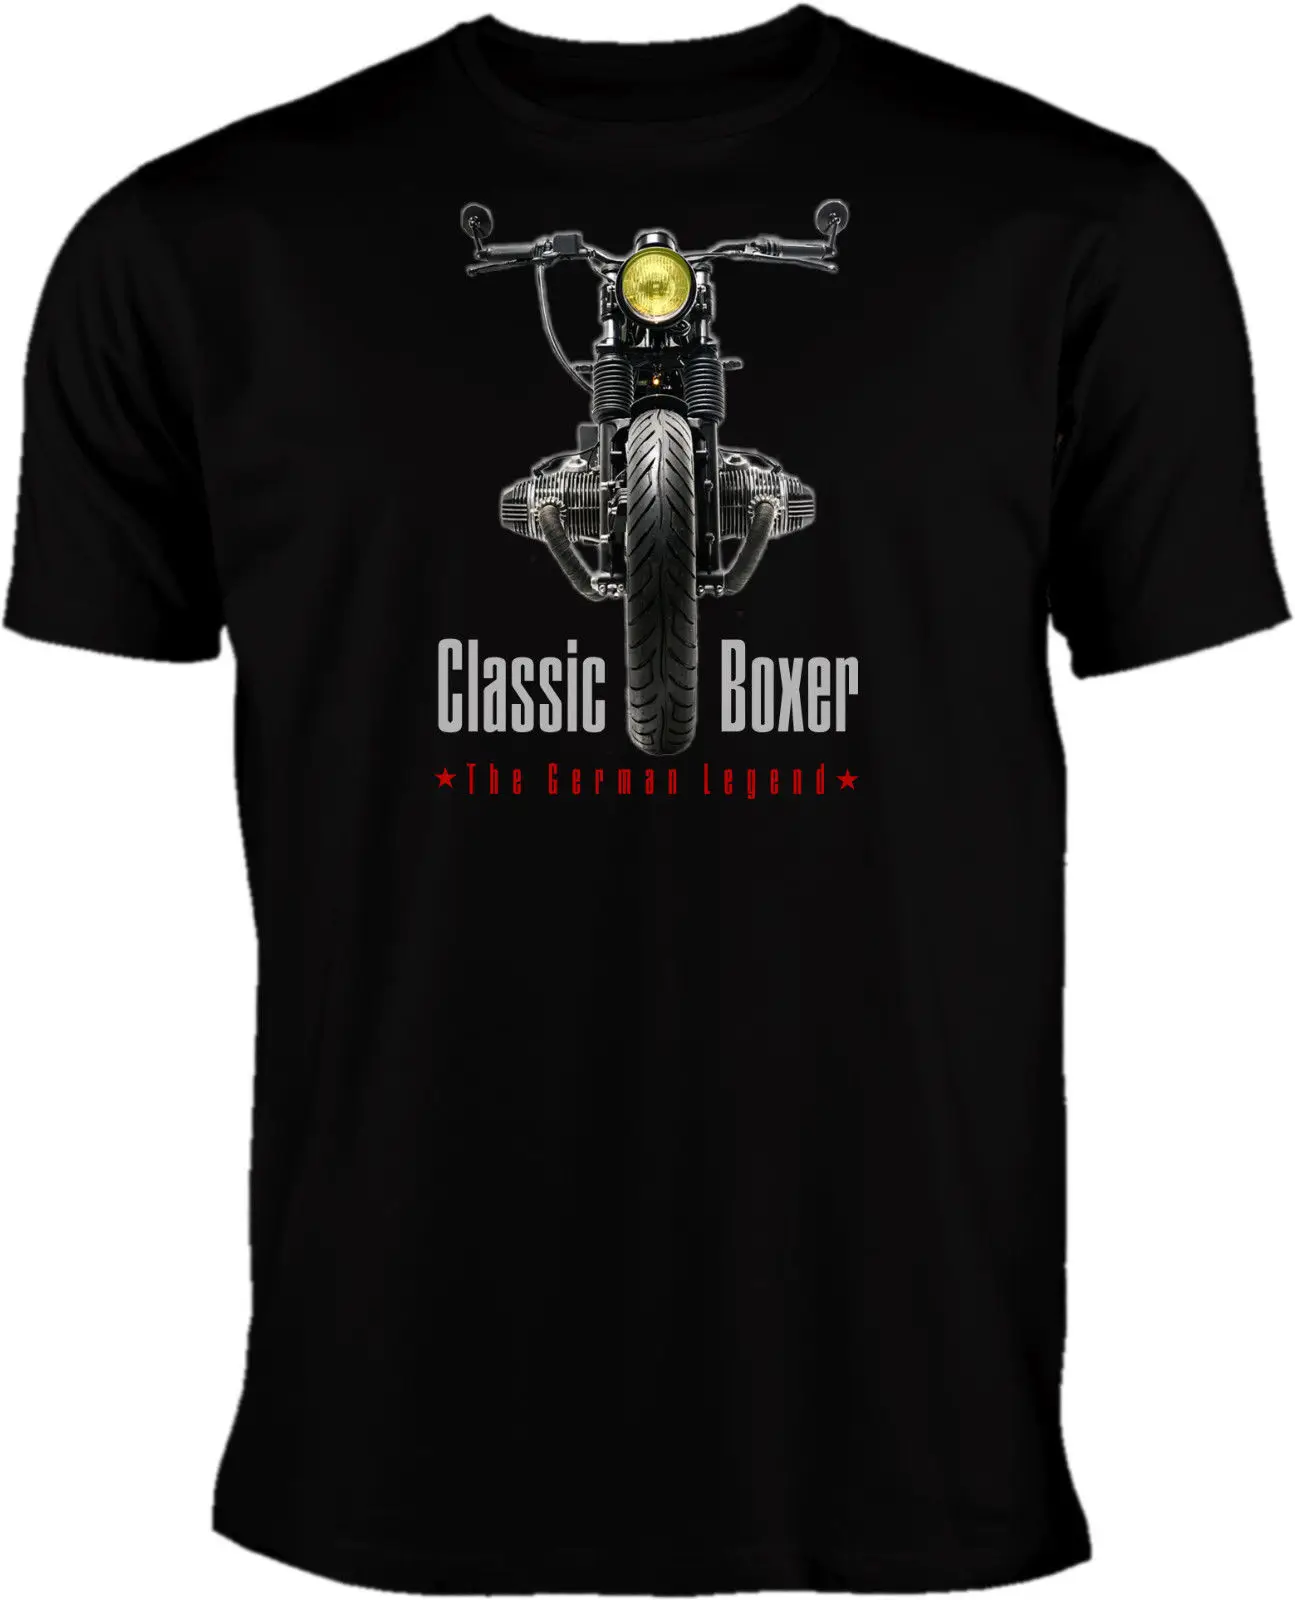 2019 Novo Poletje Moda Kul Tee Shirt Nemčiji Motorna kolesa Boksar T-Shirt nemška Legenda Classic-Biker T-Shirt Priložnostne T-shirt